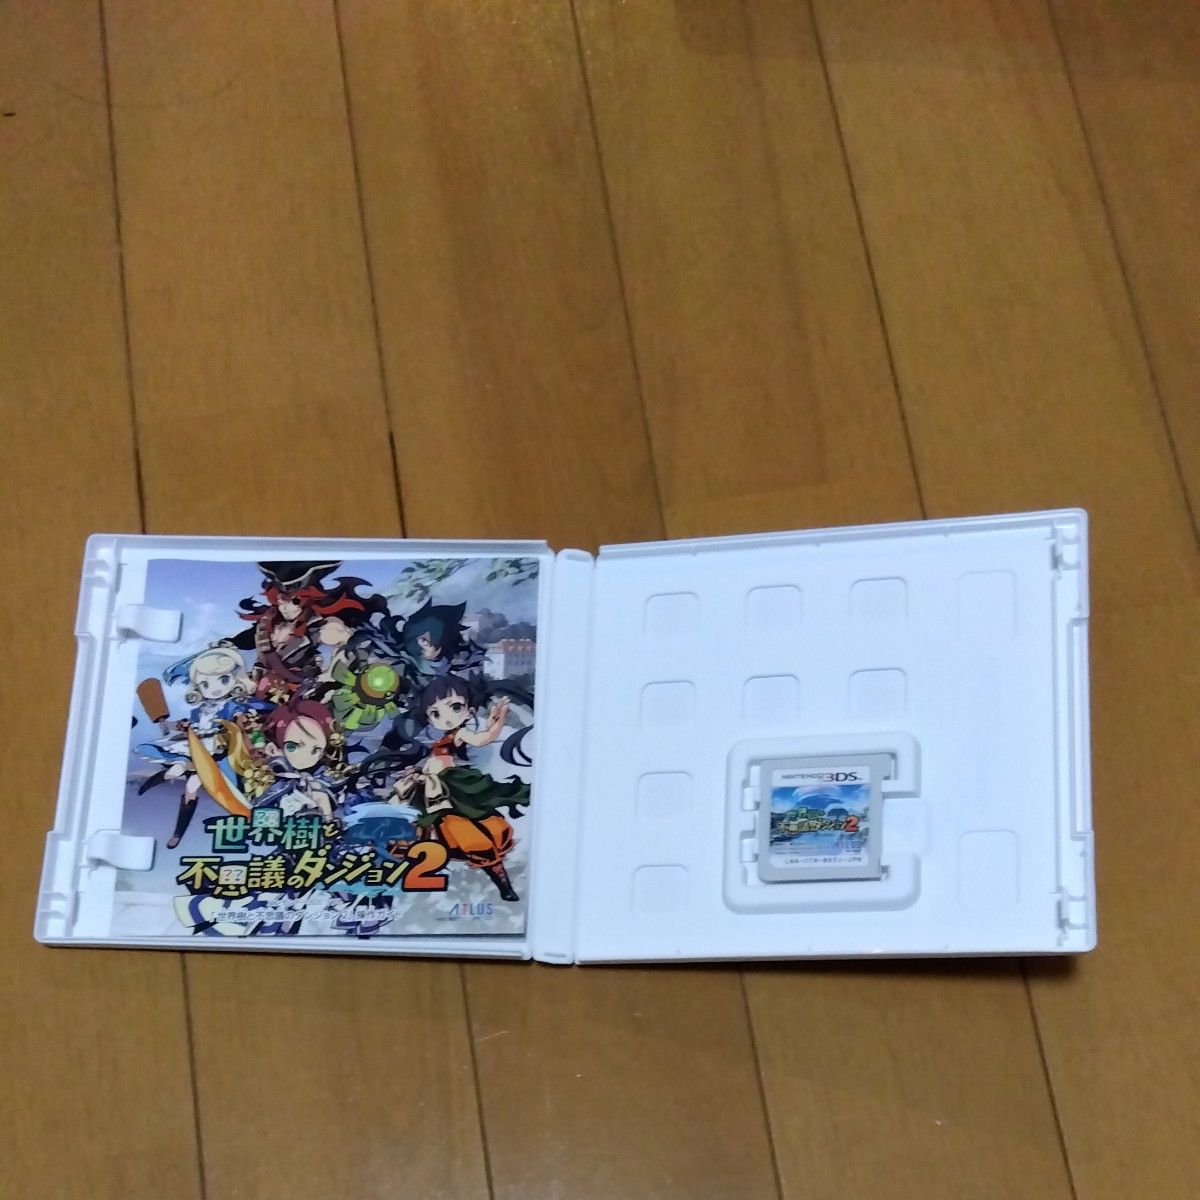 【3DS】世界樹と不思議のダンジョン2 10thアニバーサリーBOX